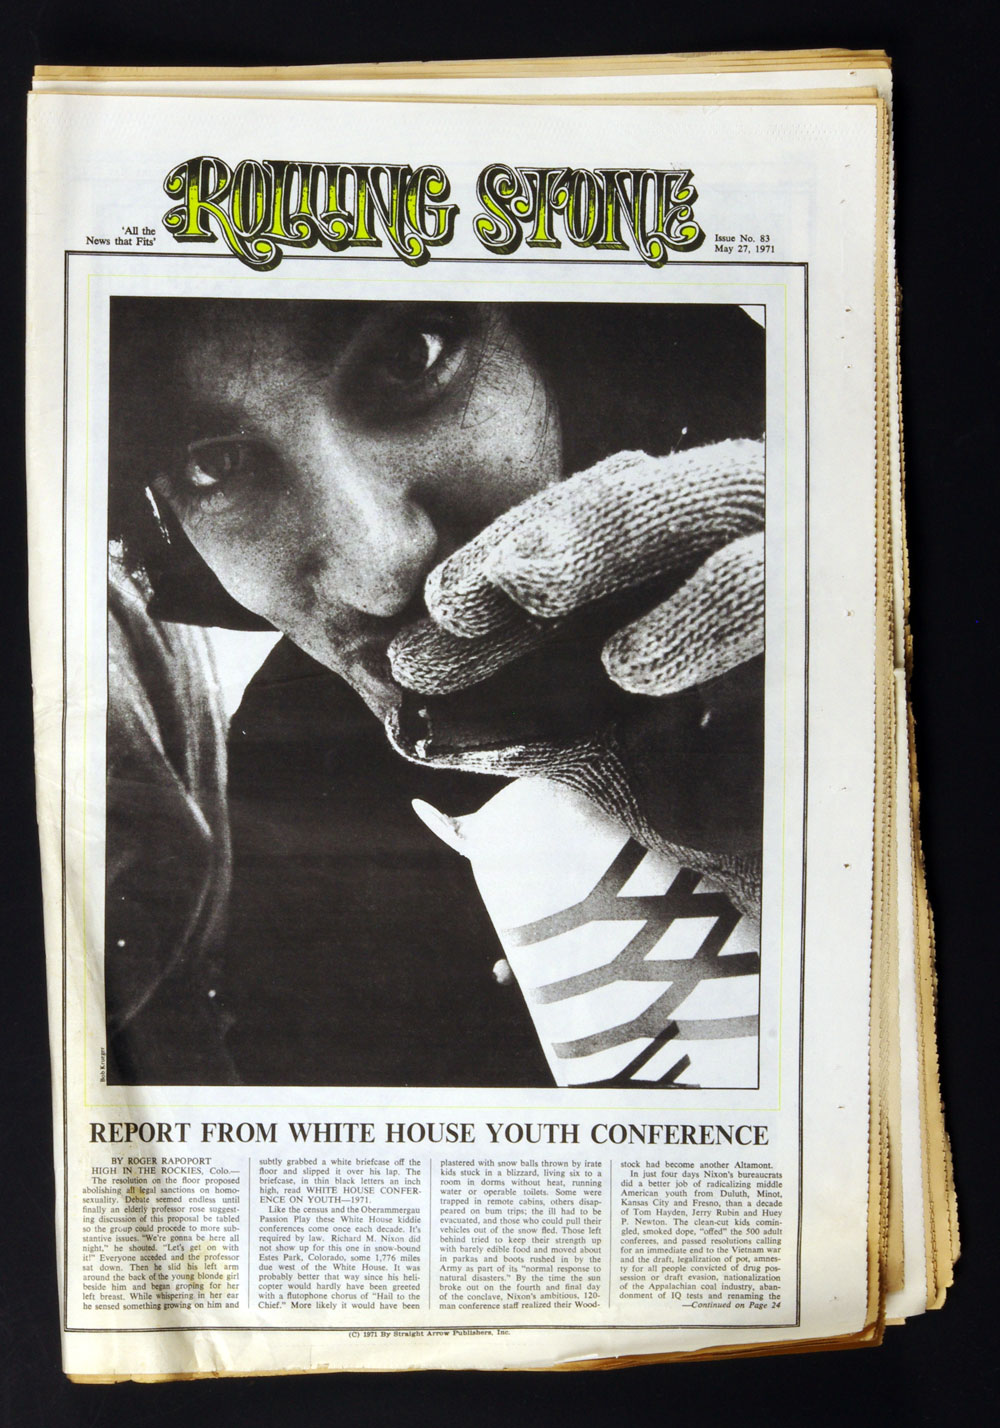 Rolling Stone Magazine  Back Issue 1971 May 27 No.83 Country Joe McDonald